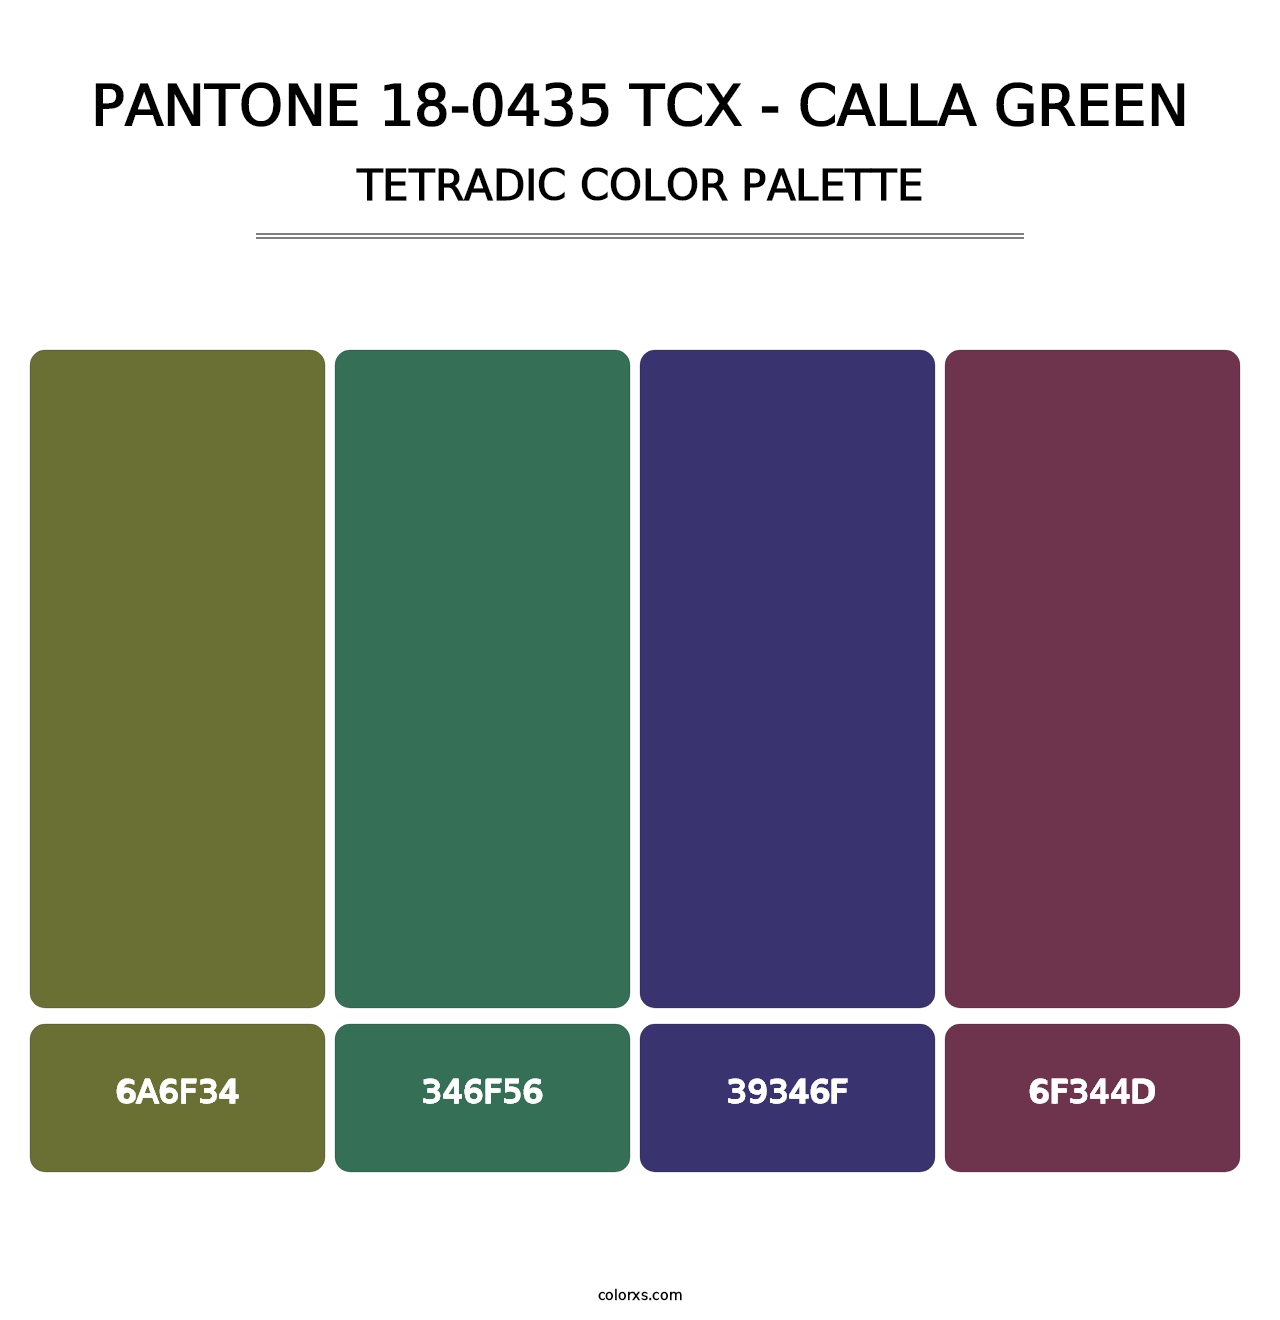 PANTONE 18-0435 TCX - Calla Green - Tetradic Color Palette